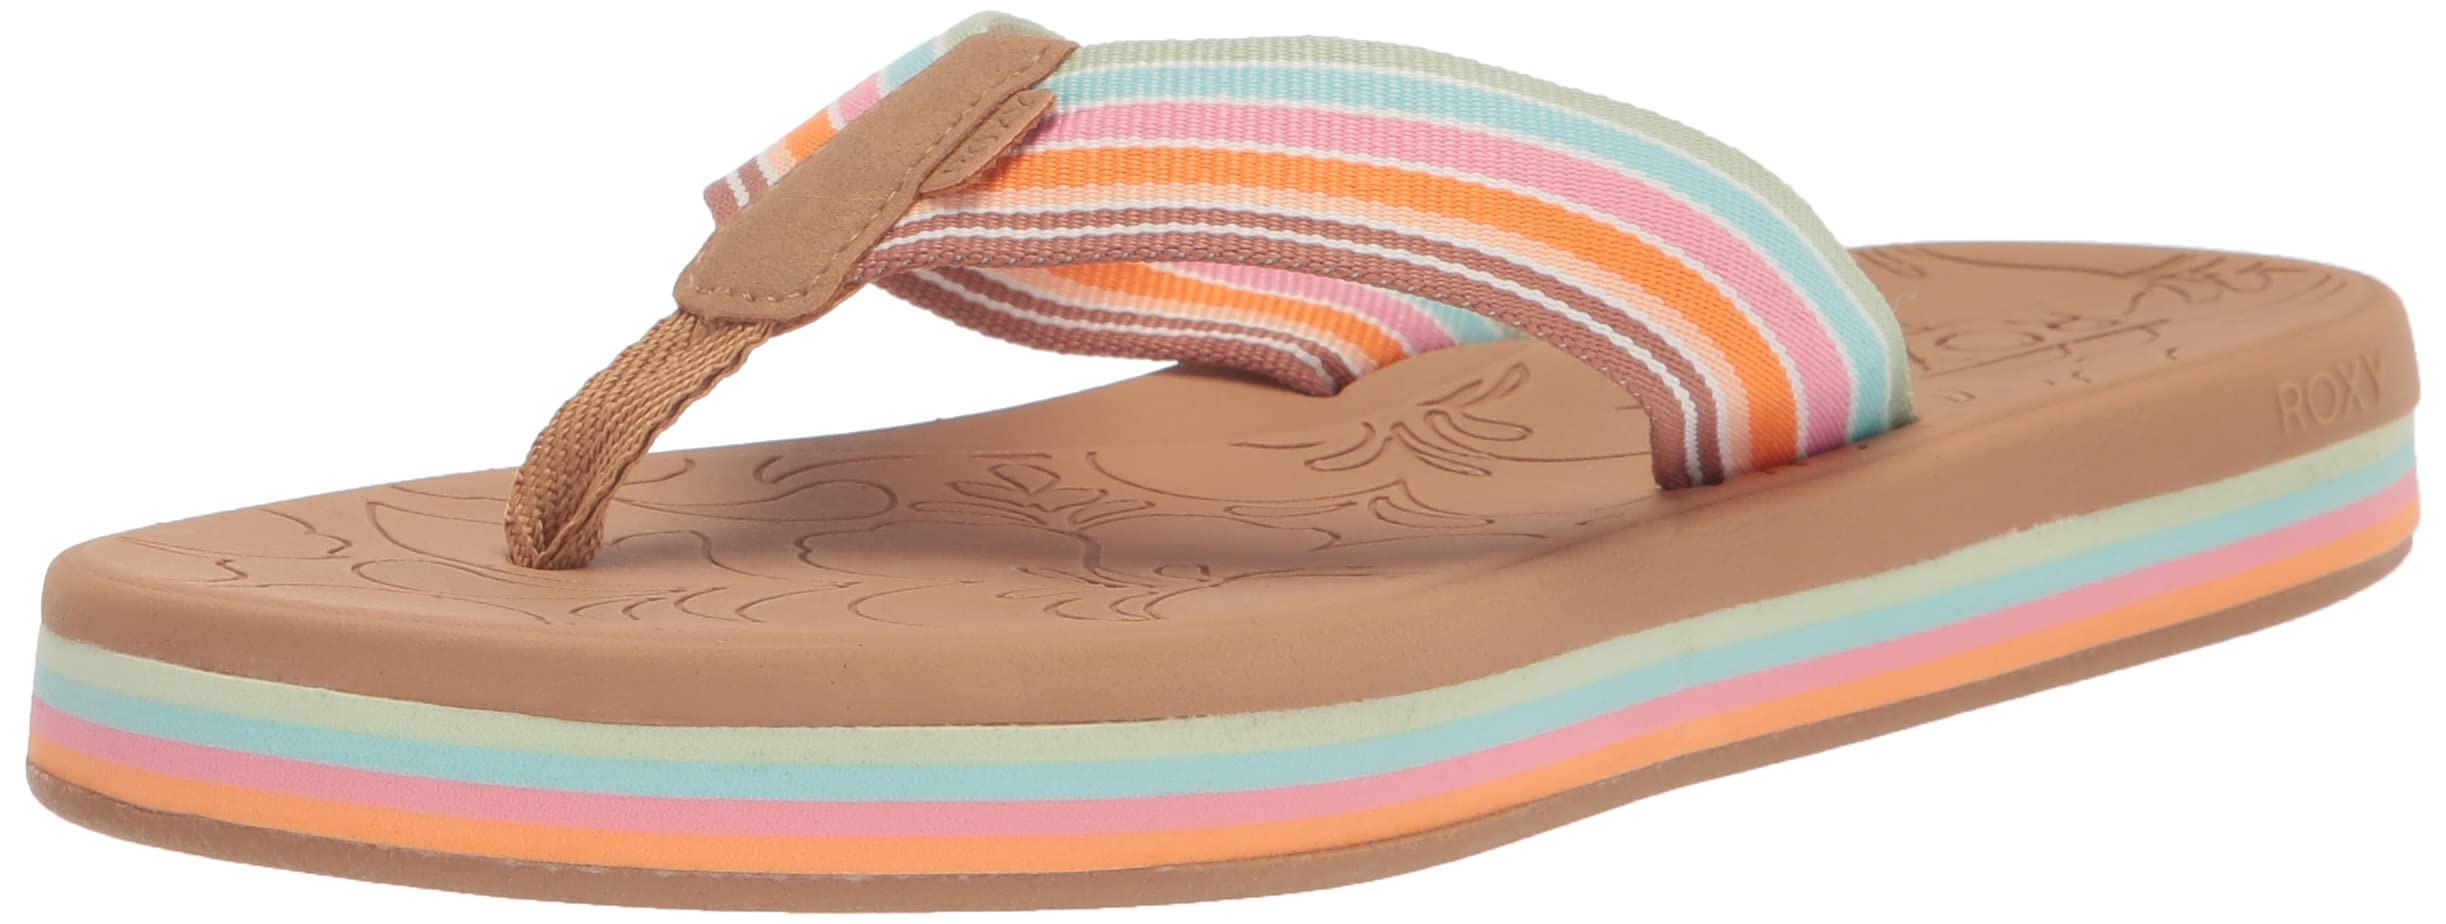 Roxy Colbee Hi Sandals White/Orange/Pink 10 M